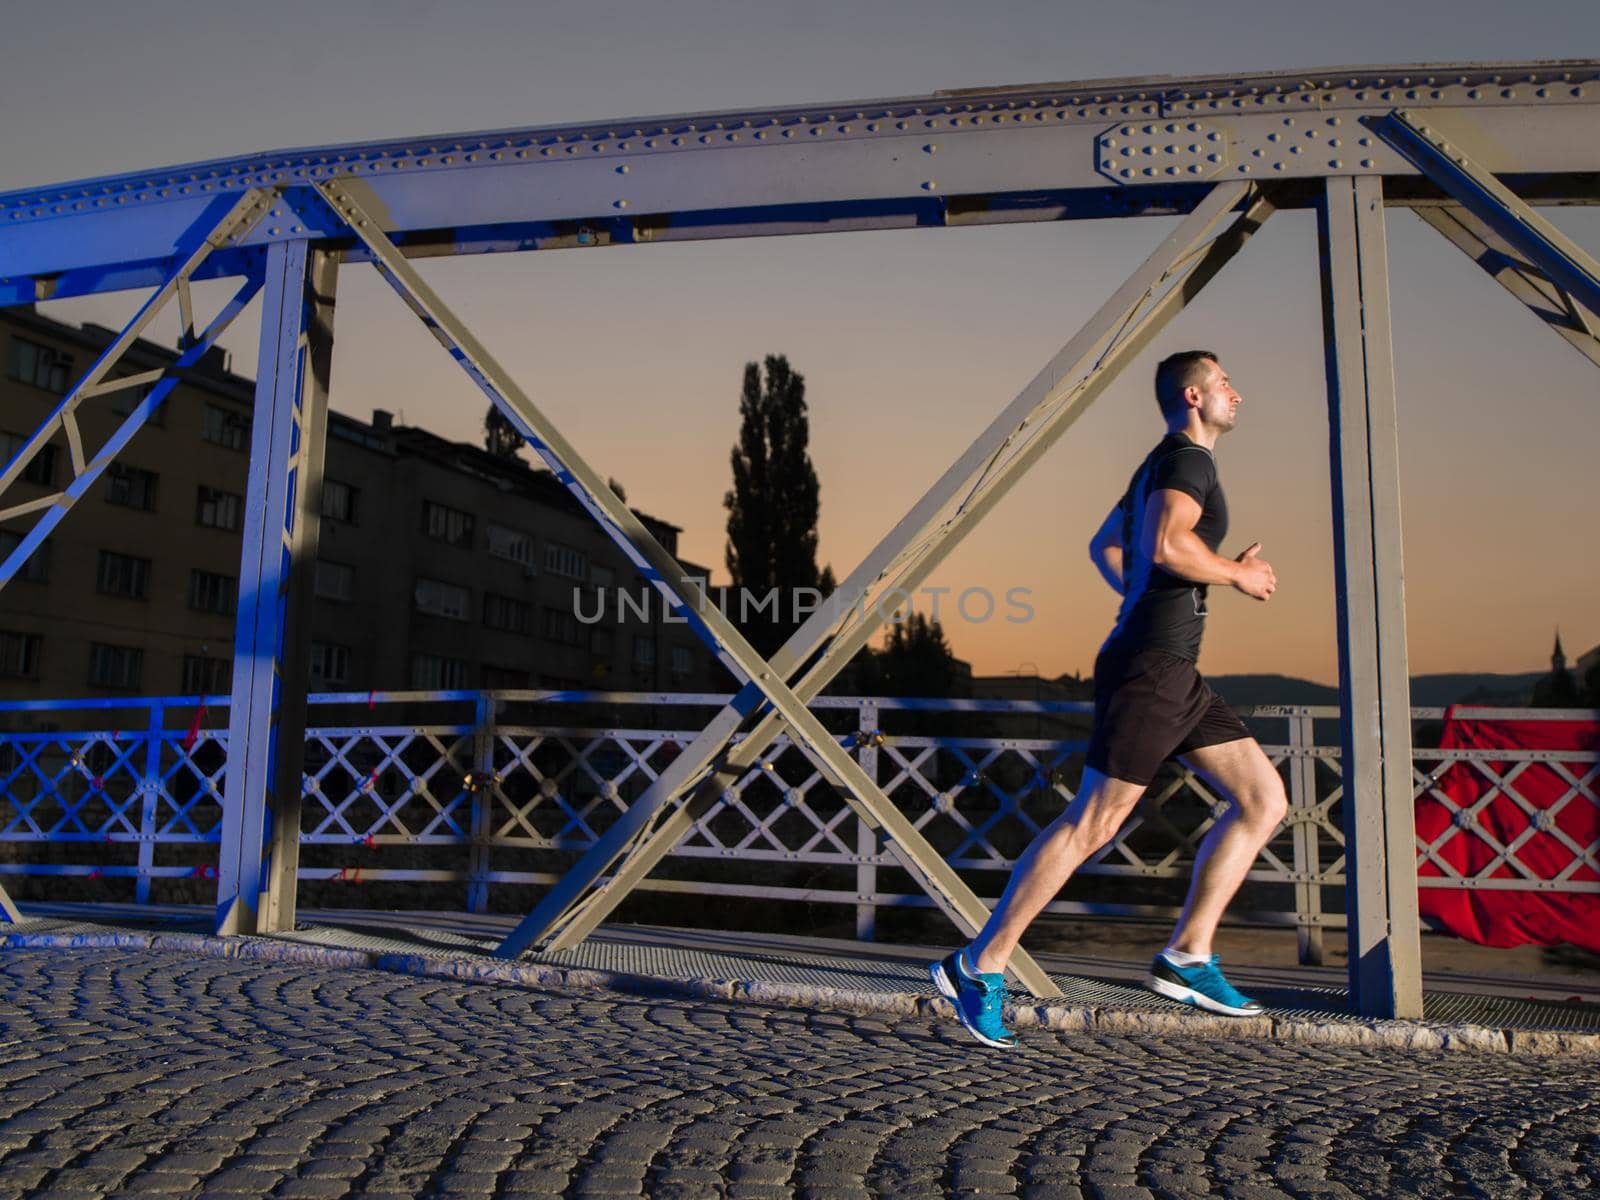 man jogging across the bridge in the city by dotshock